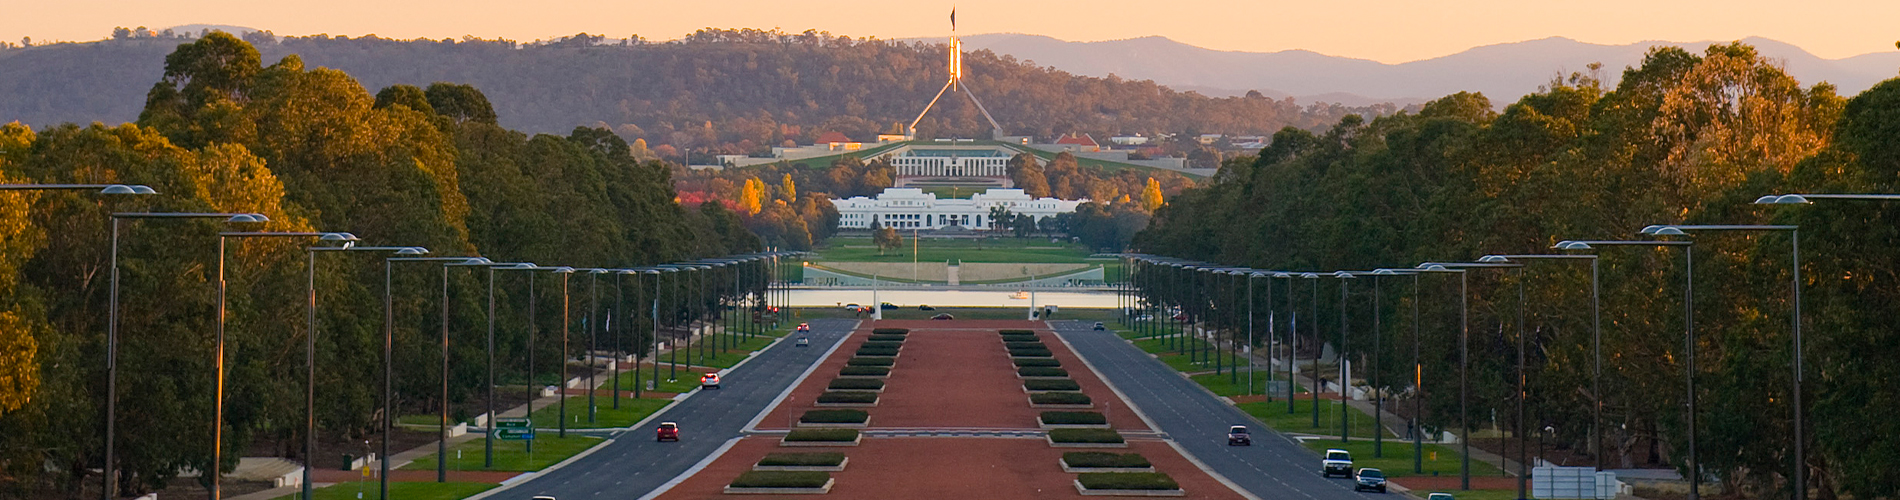 Canberra Parliament - Sydney Avenue 1900x500